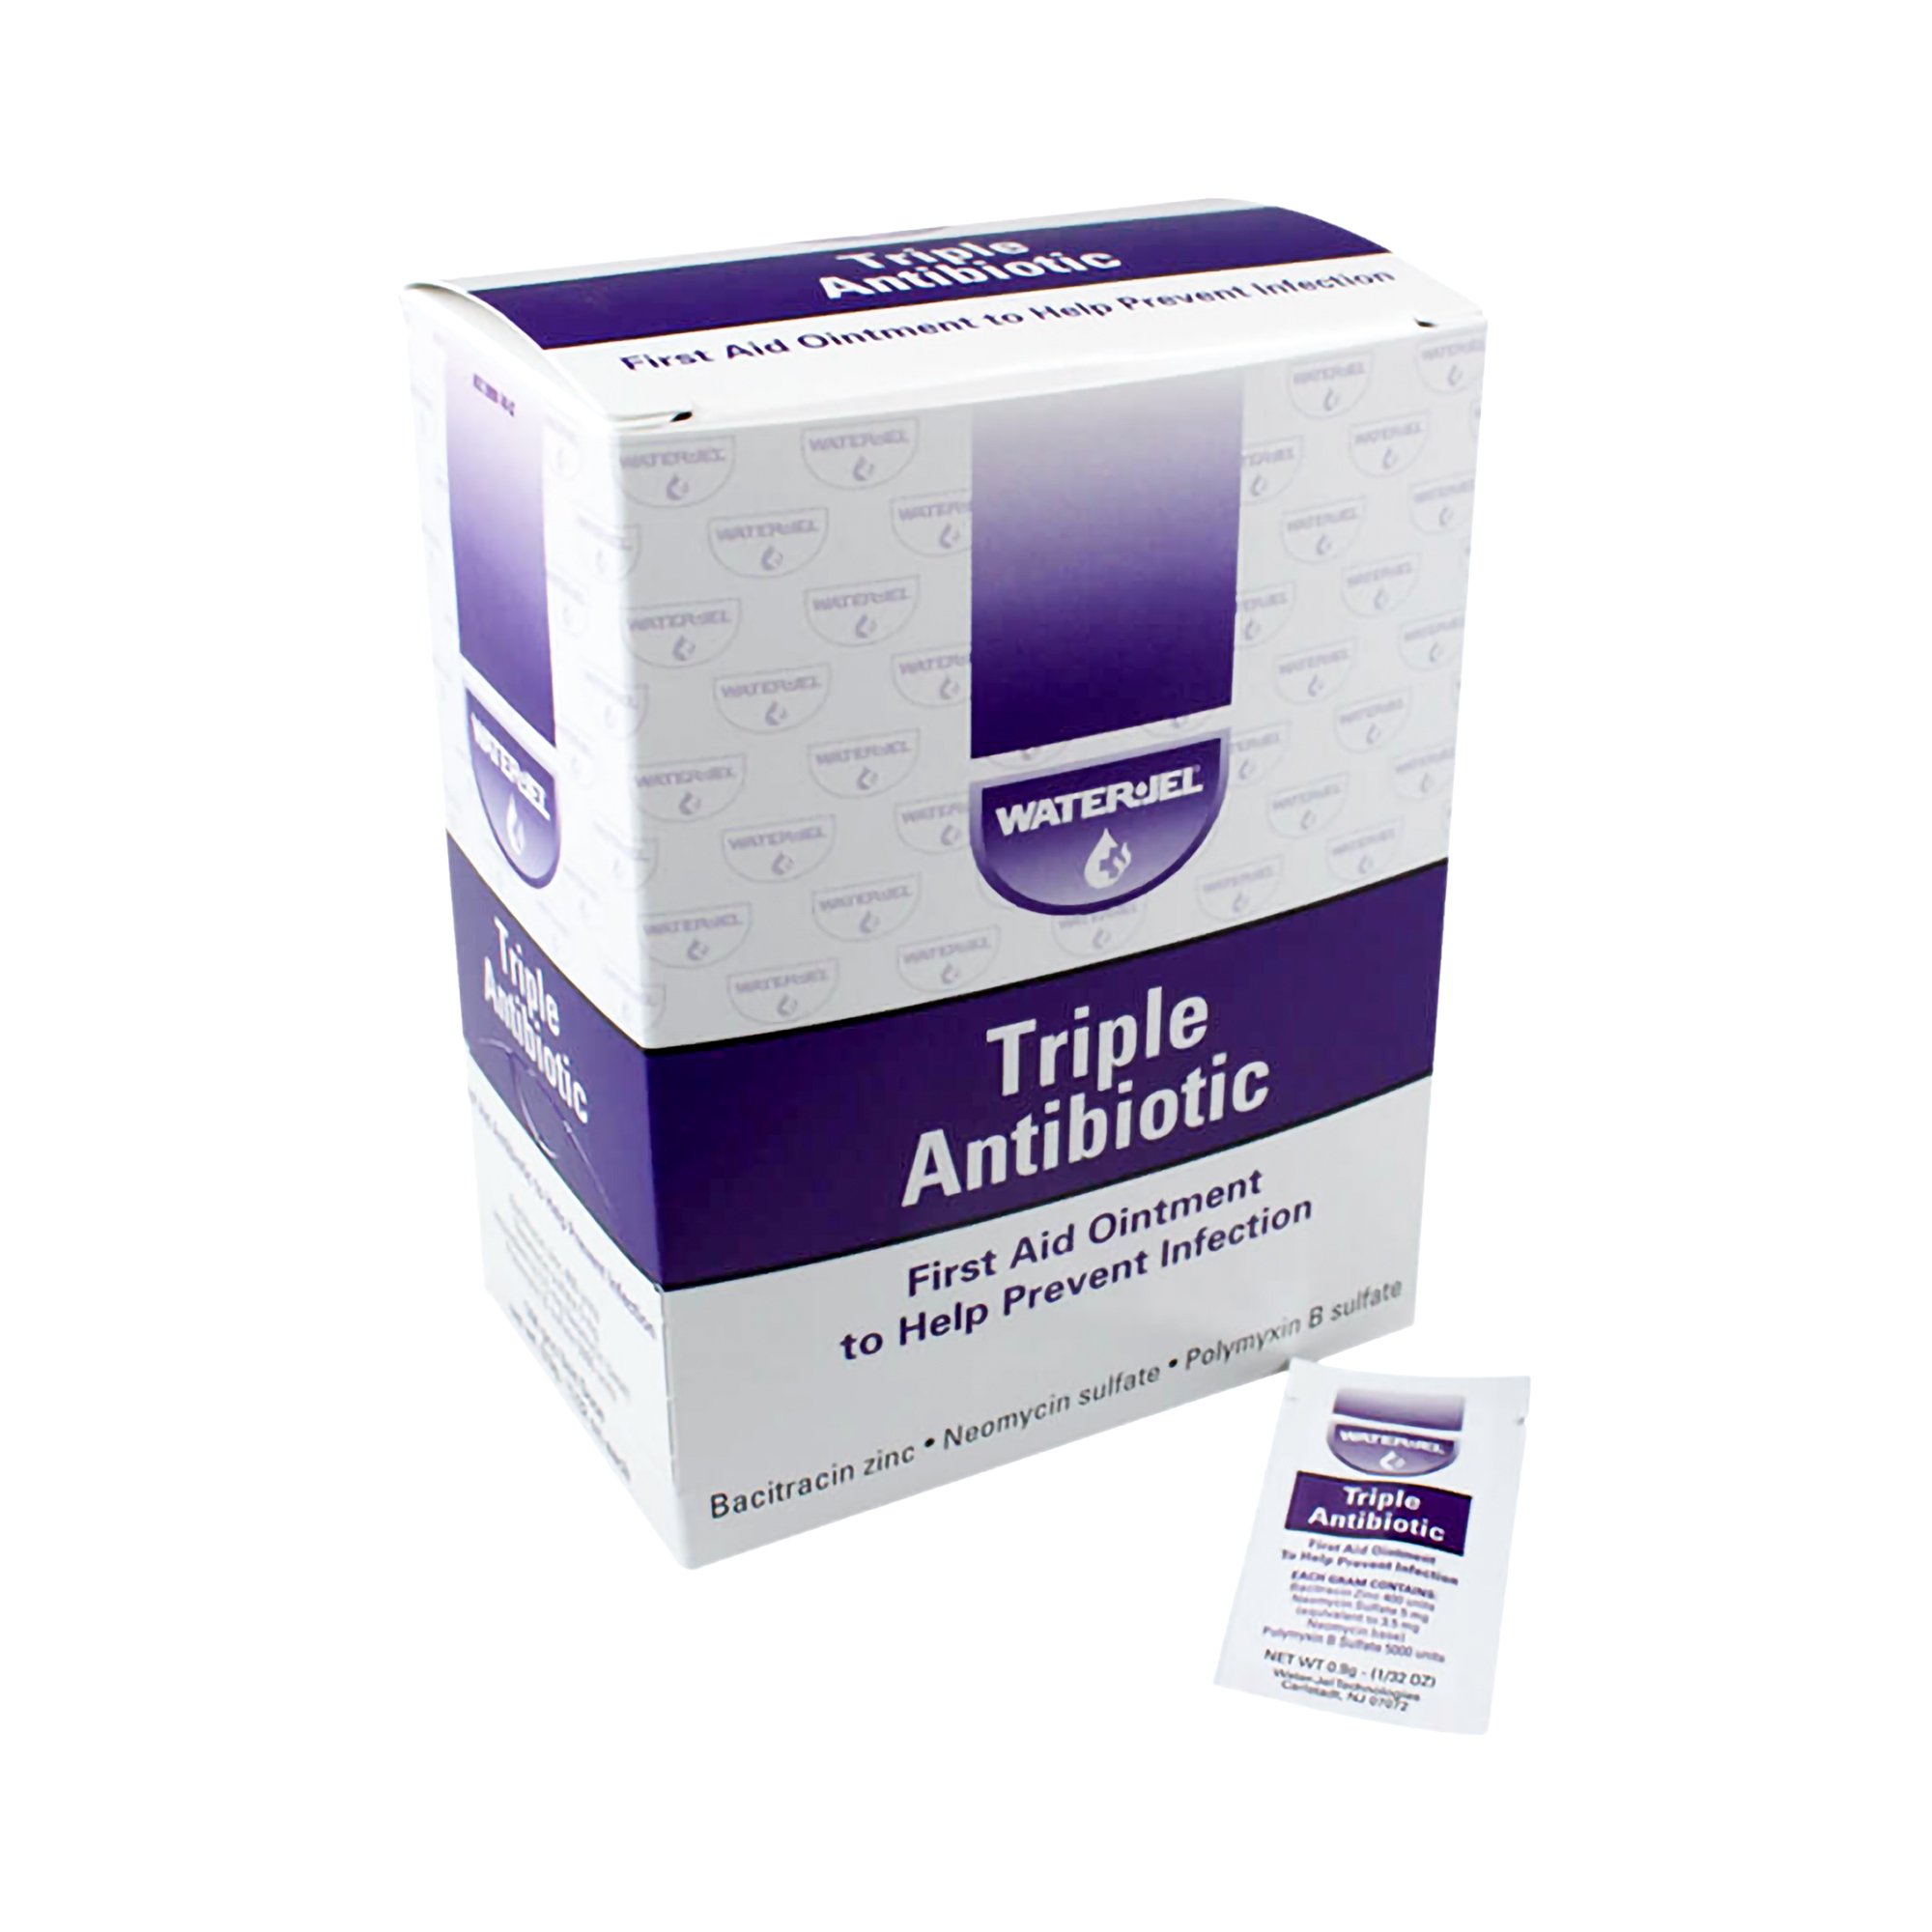 Triple Antibiotic First Aid Antibiotic Water Jel .. .  .  